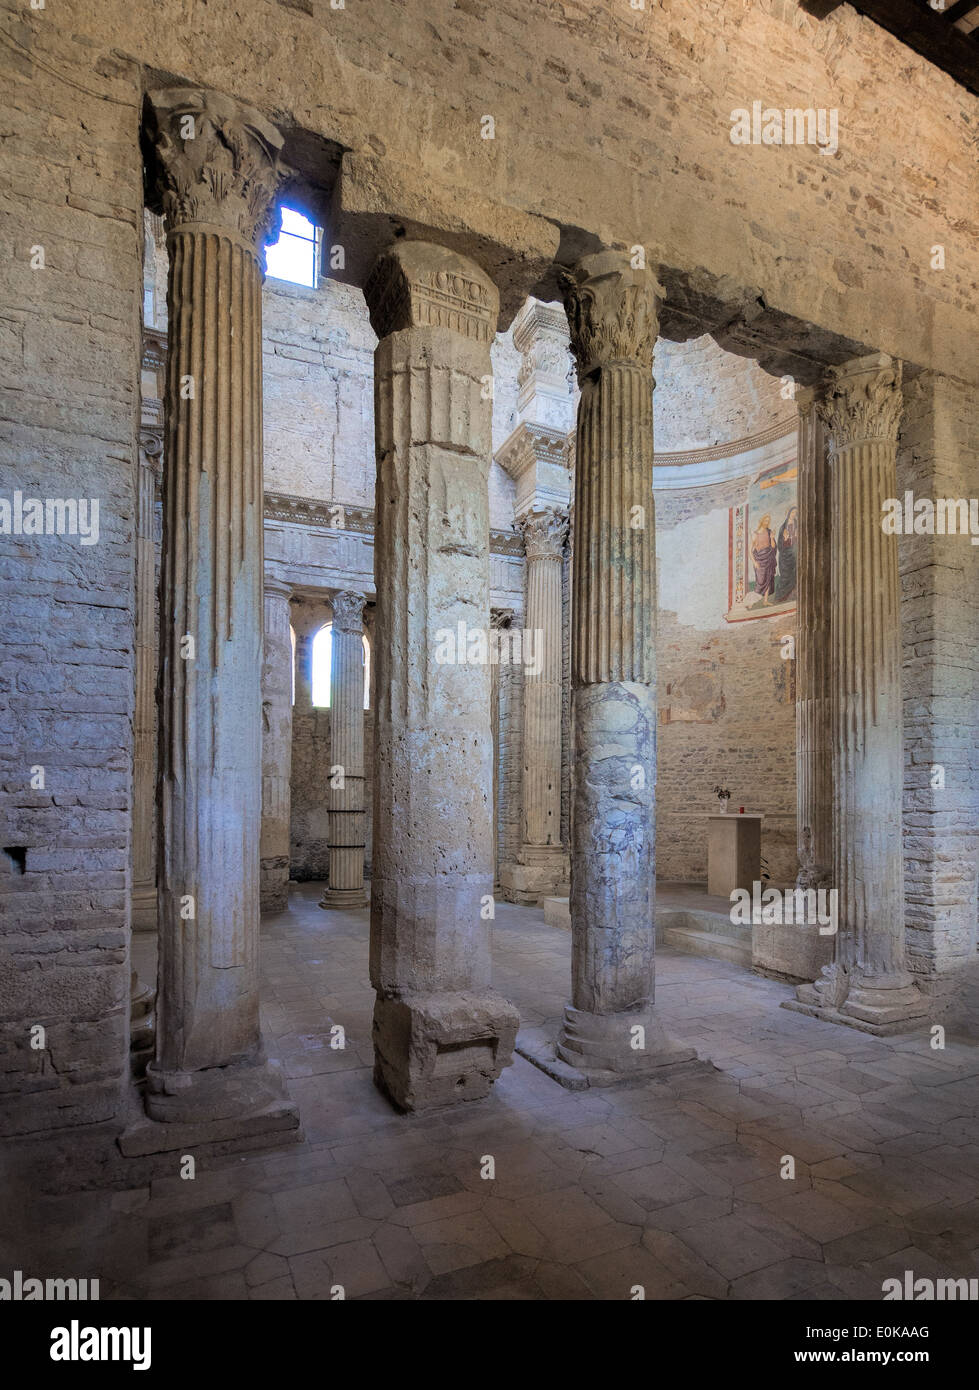 Romanesque church of San Salvatore in Spoleto, Umbria, Italy; interior view with columns Stock Photo